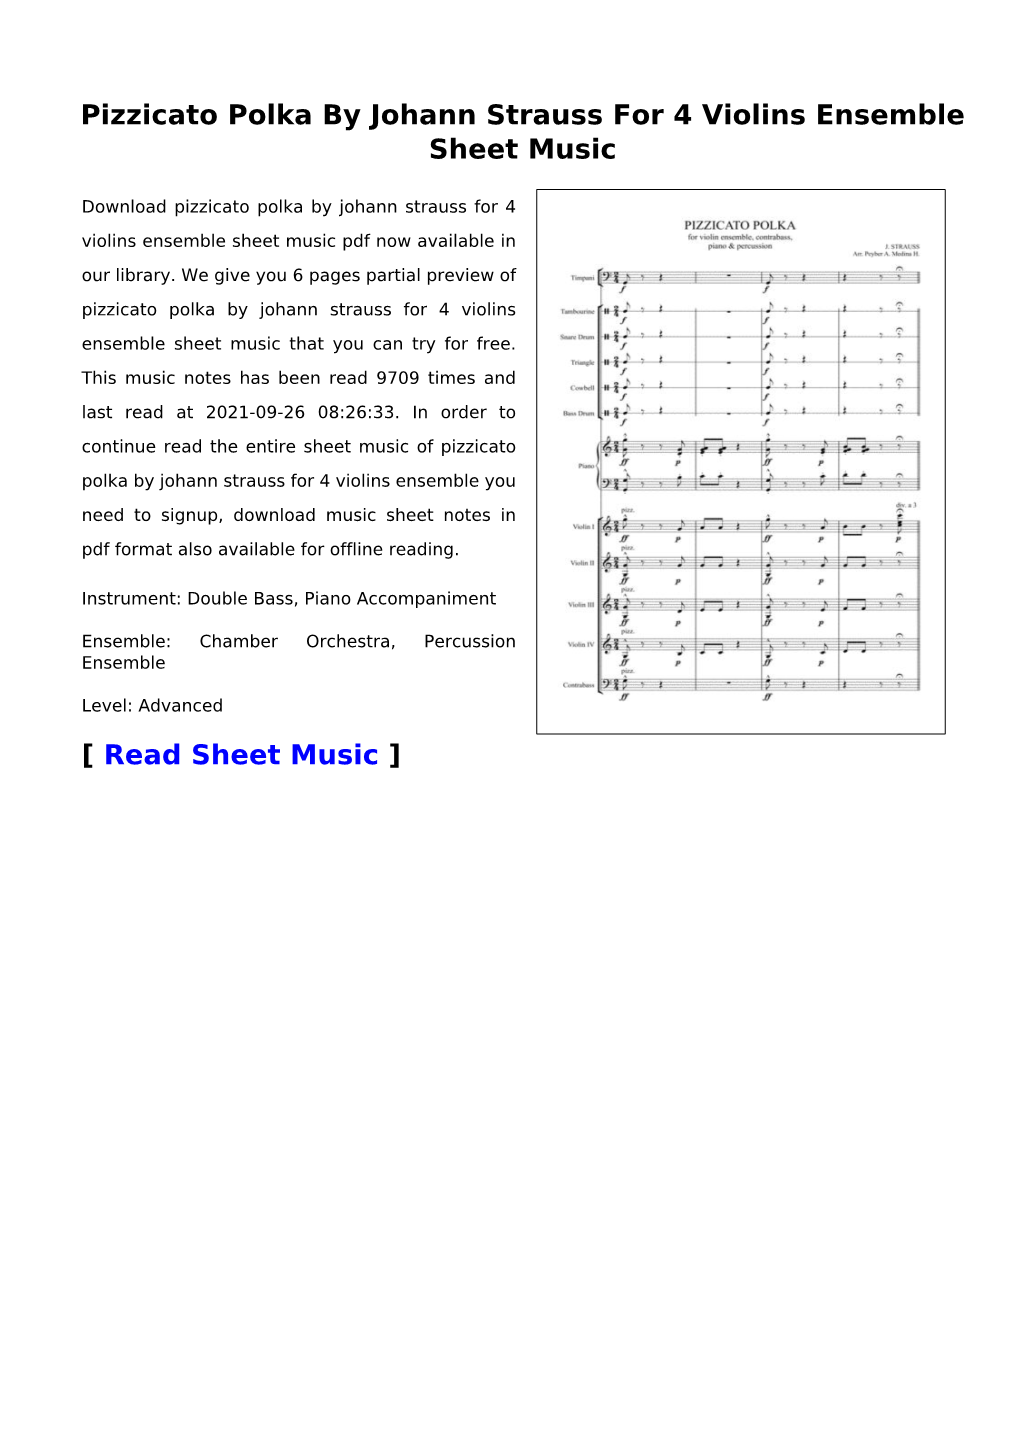 Pizzicato Polka by Johann Strauss for 4 Violins Ensemble Sheet Music